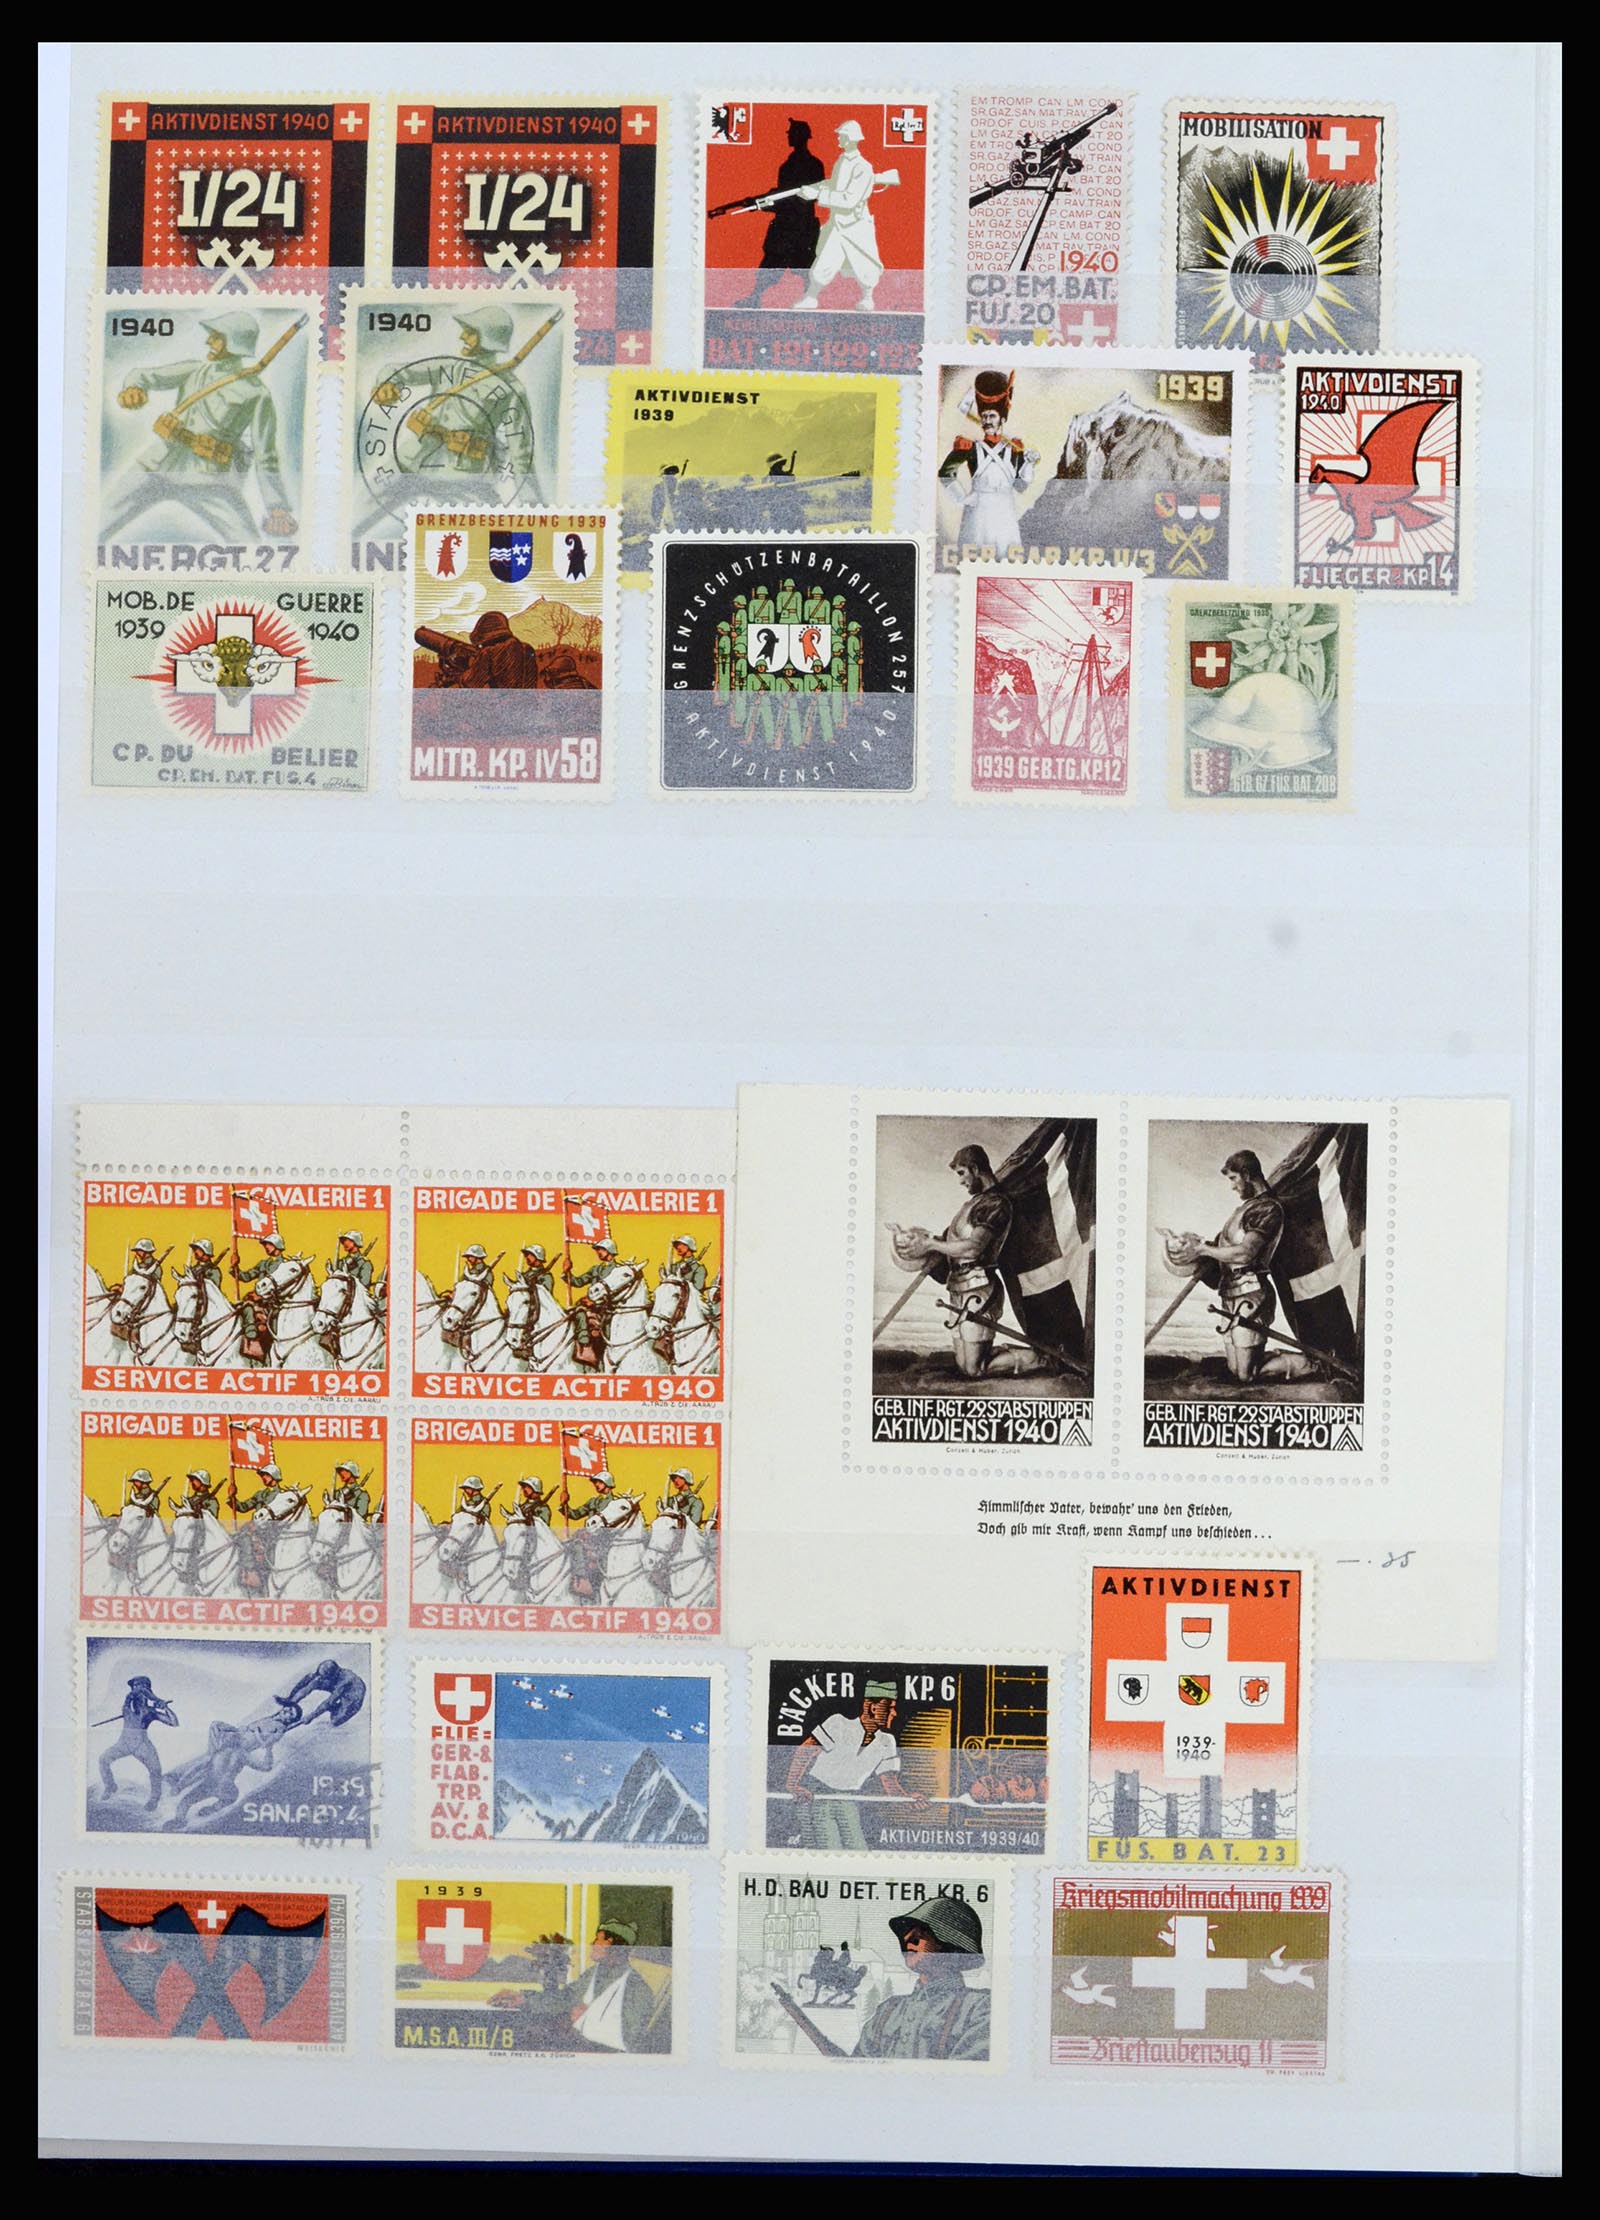 37149 016 - Stamp collection 37149 Switzerland soldier stamps 1914-1945.